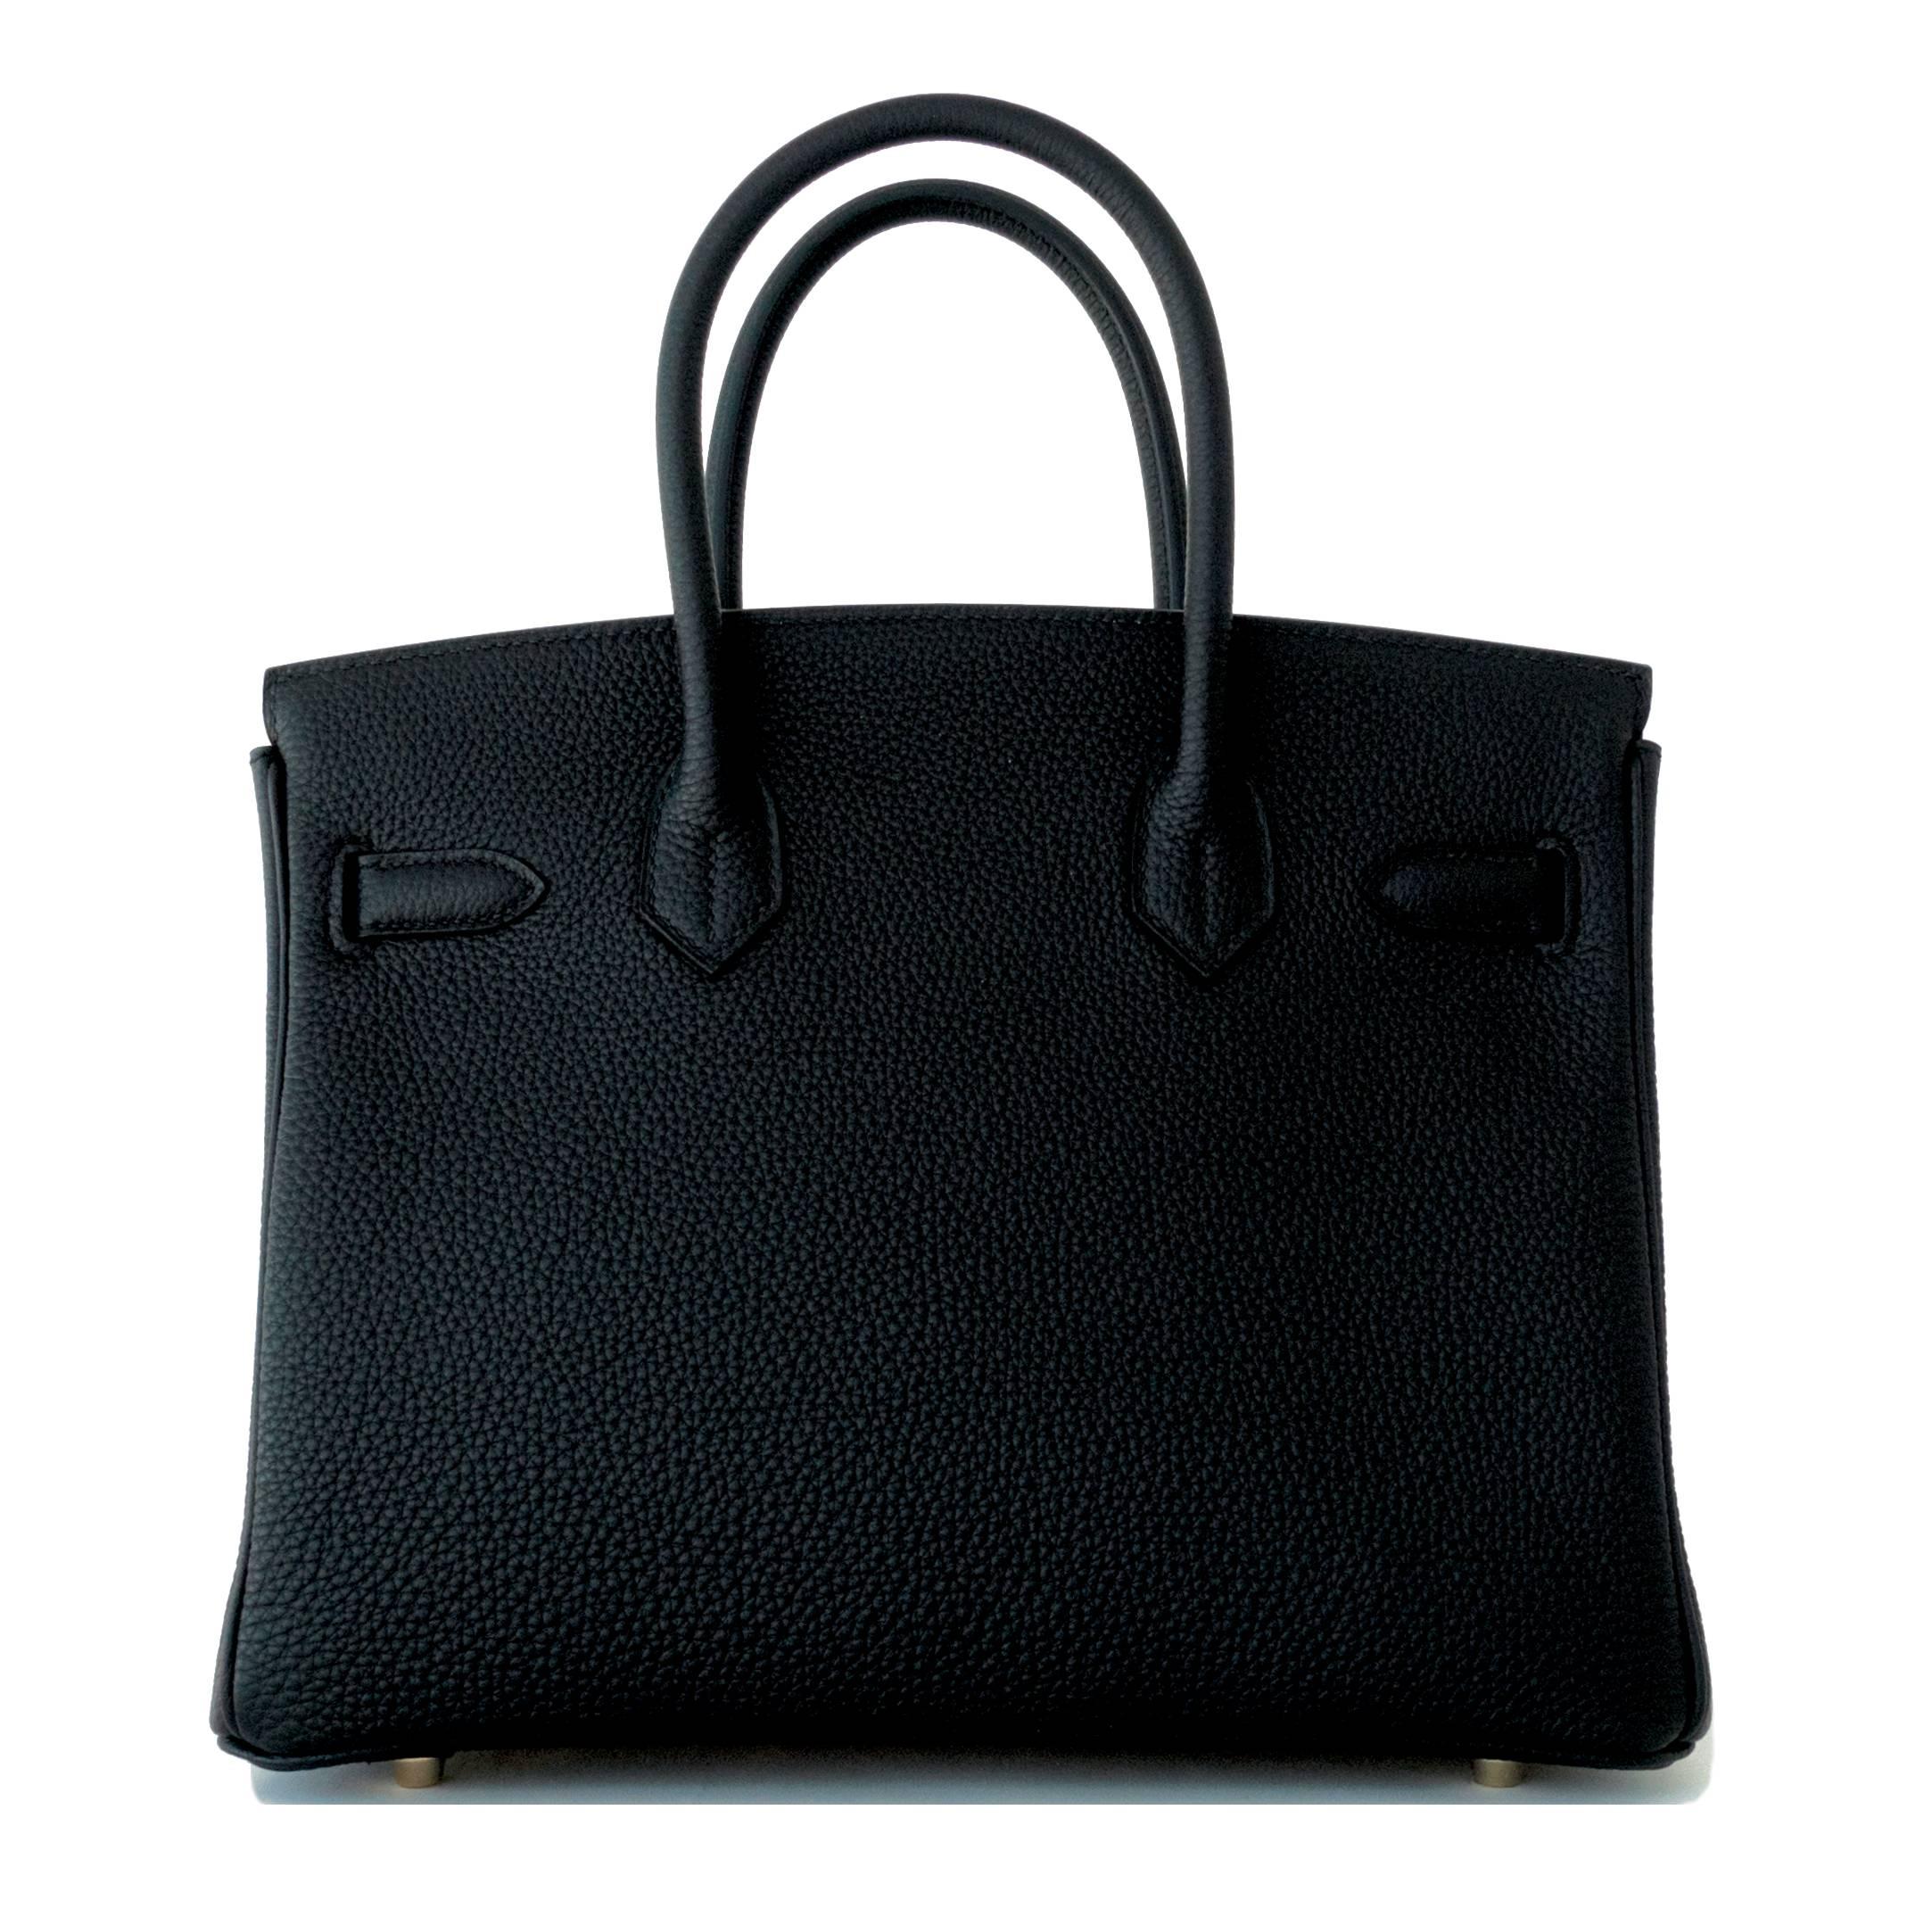 Women's Hermes Black 30cm Birkin Togo Gold Hardware GHW Bag Tote Most Requested